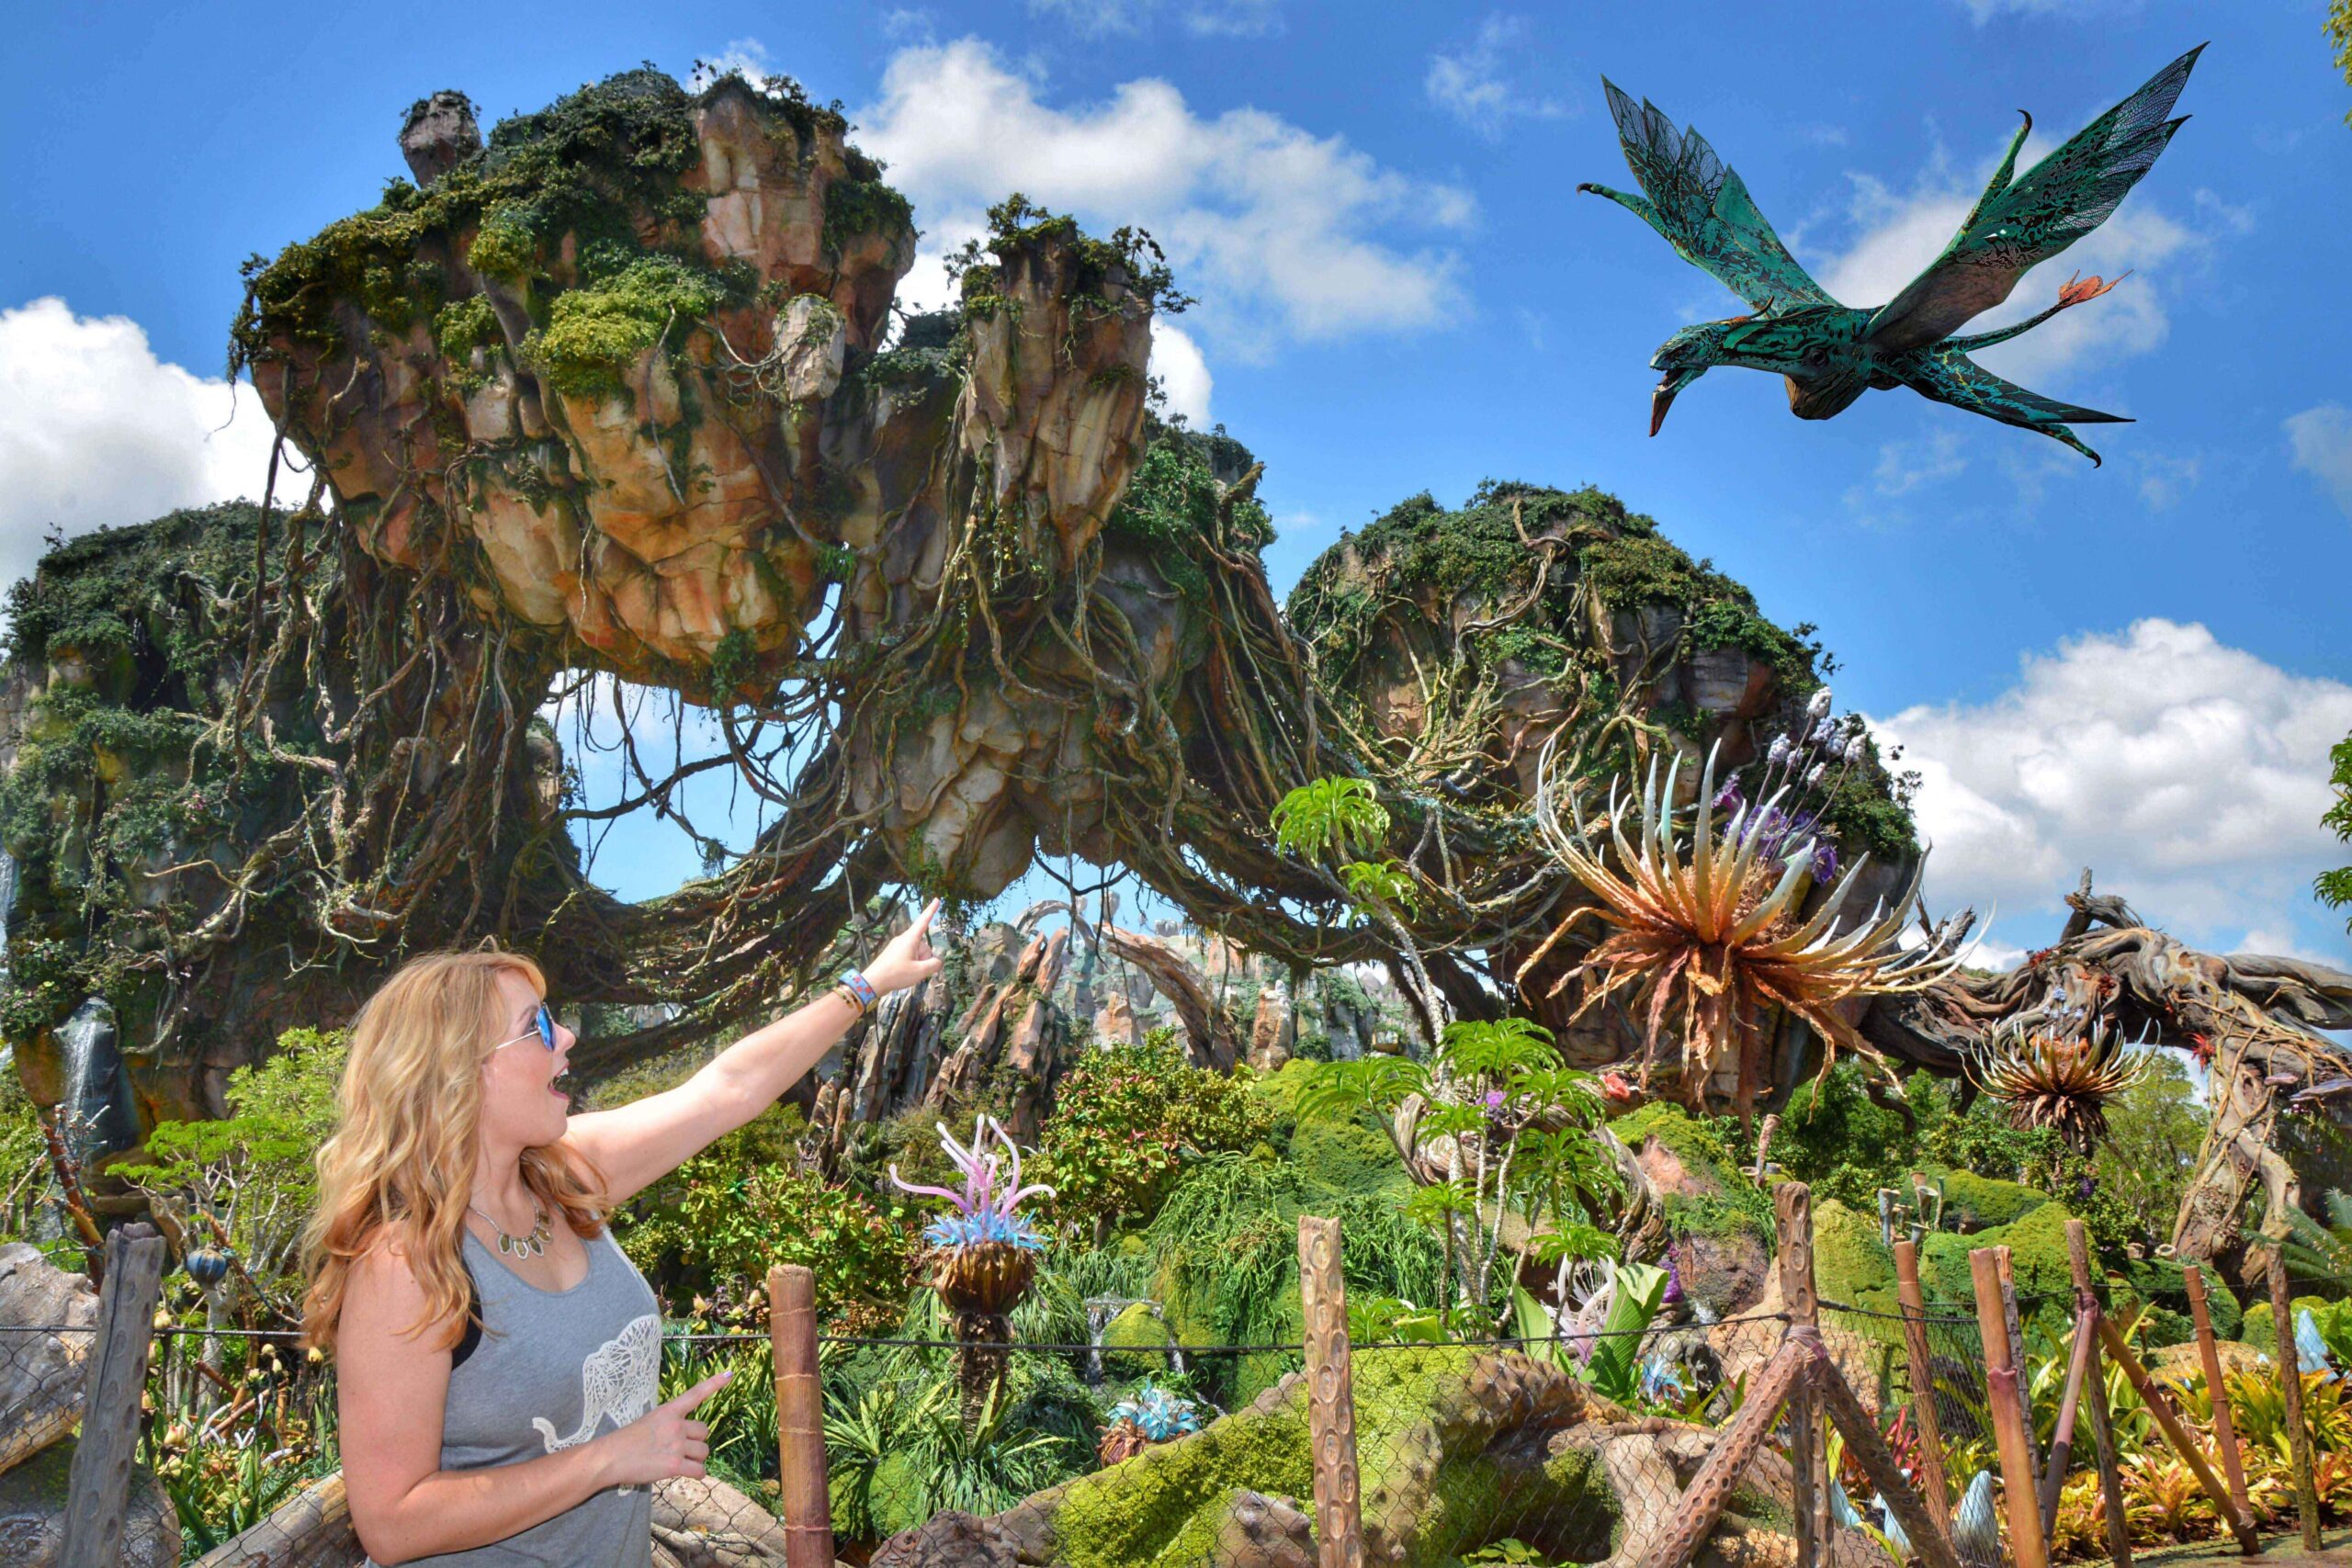 Walt Disney Worlds new land that is Pandora The World of Avatar